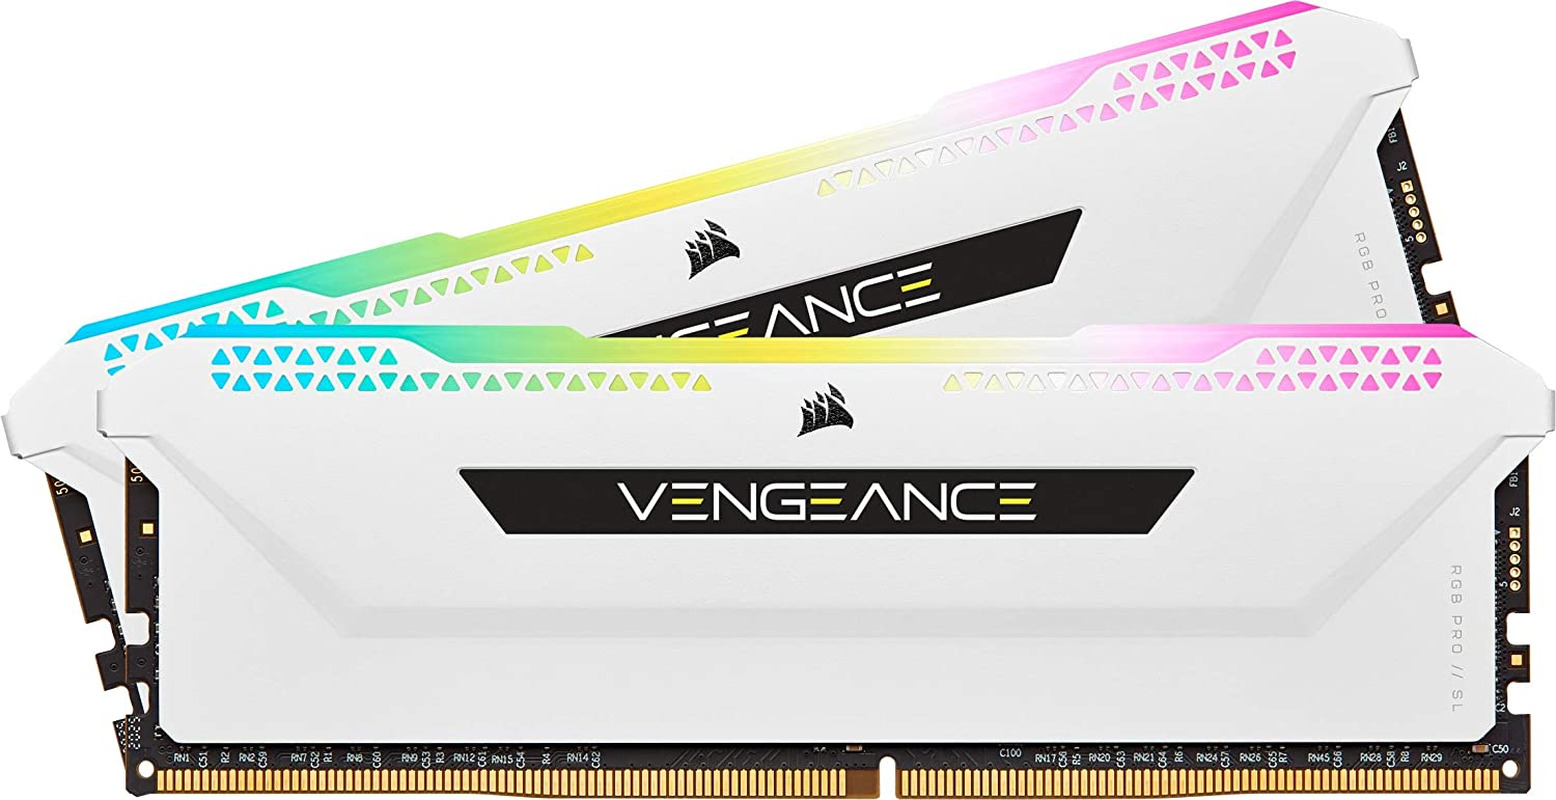 Vengeance RGB Pro SL 16GB (2X8Gb) DDR4 3200 (PC4-25600) C16 1.35V Desktop Memory